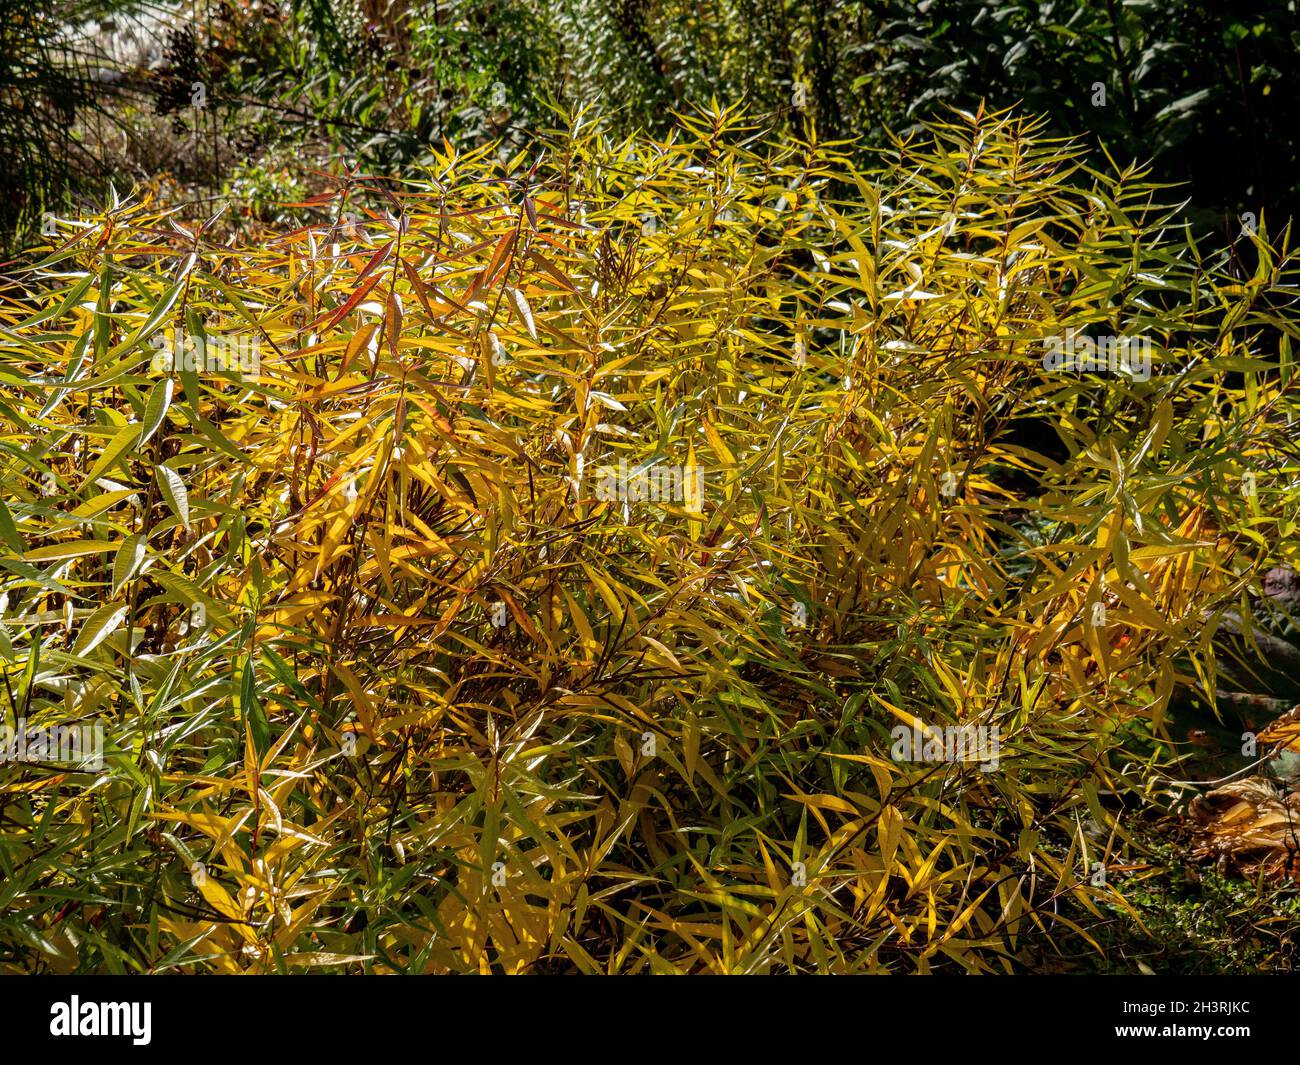 The old gold autumn foliage of Amsonia illustra Stock Photo